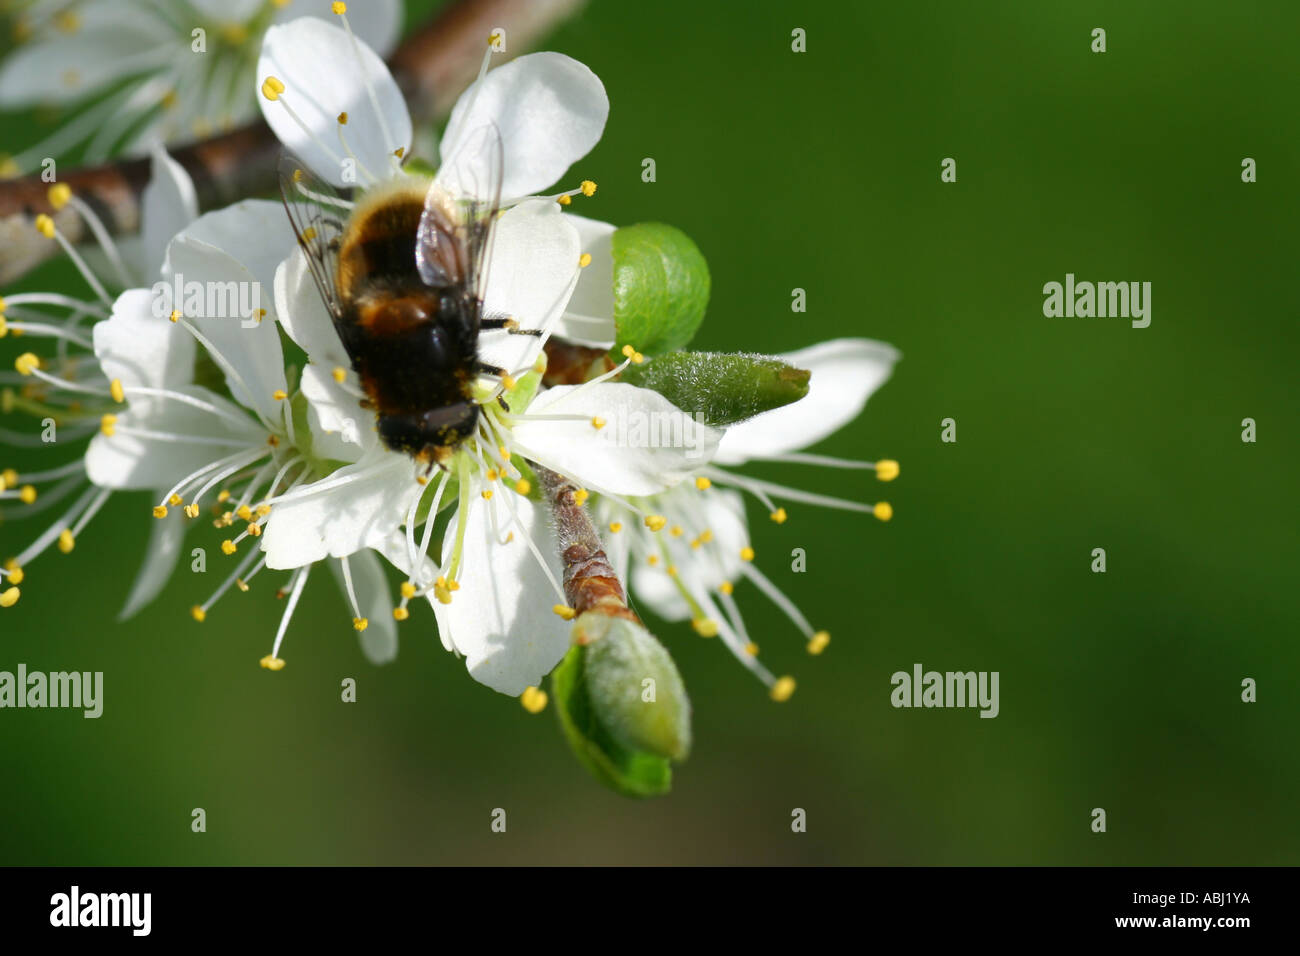 Bumble bee, bombus terrestris, on damson blossom, Blair Atholl, Perthshire, Scotland, UK Stock Photo